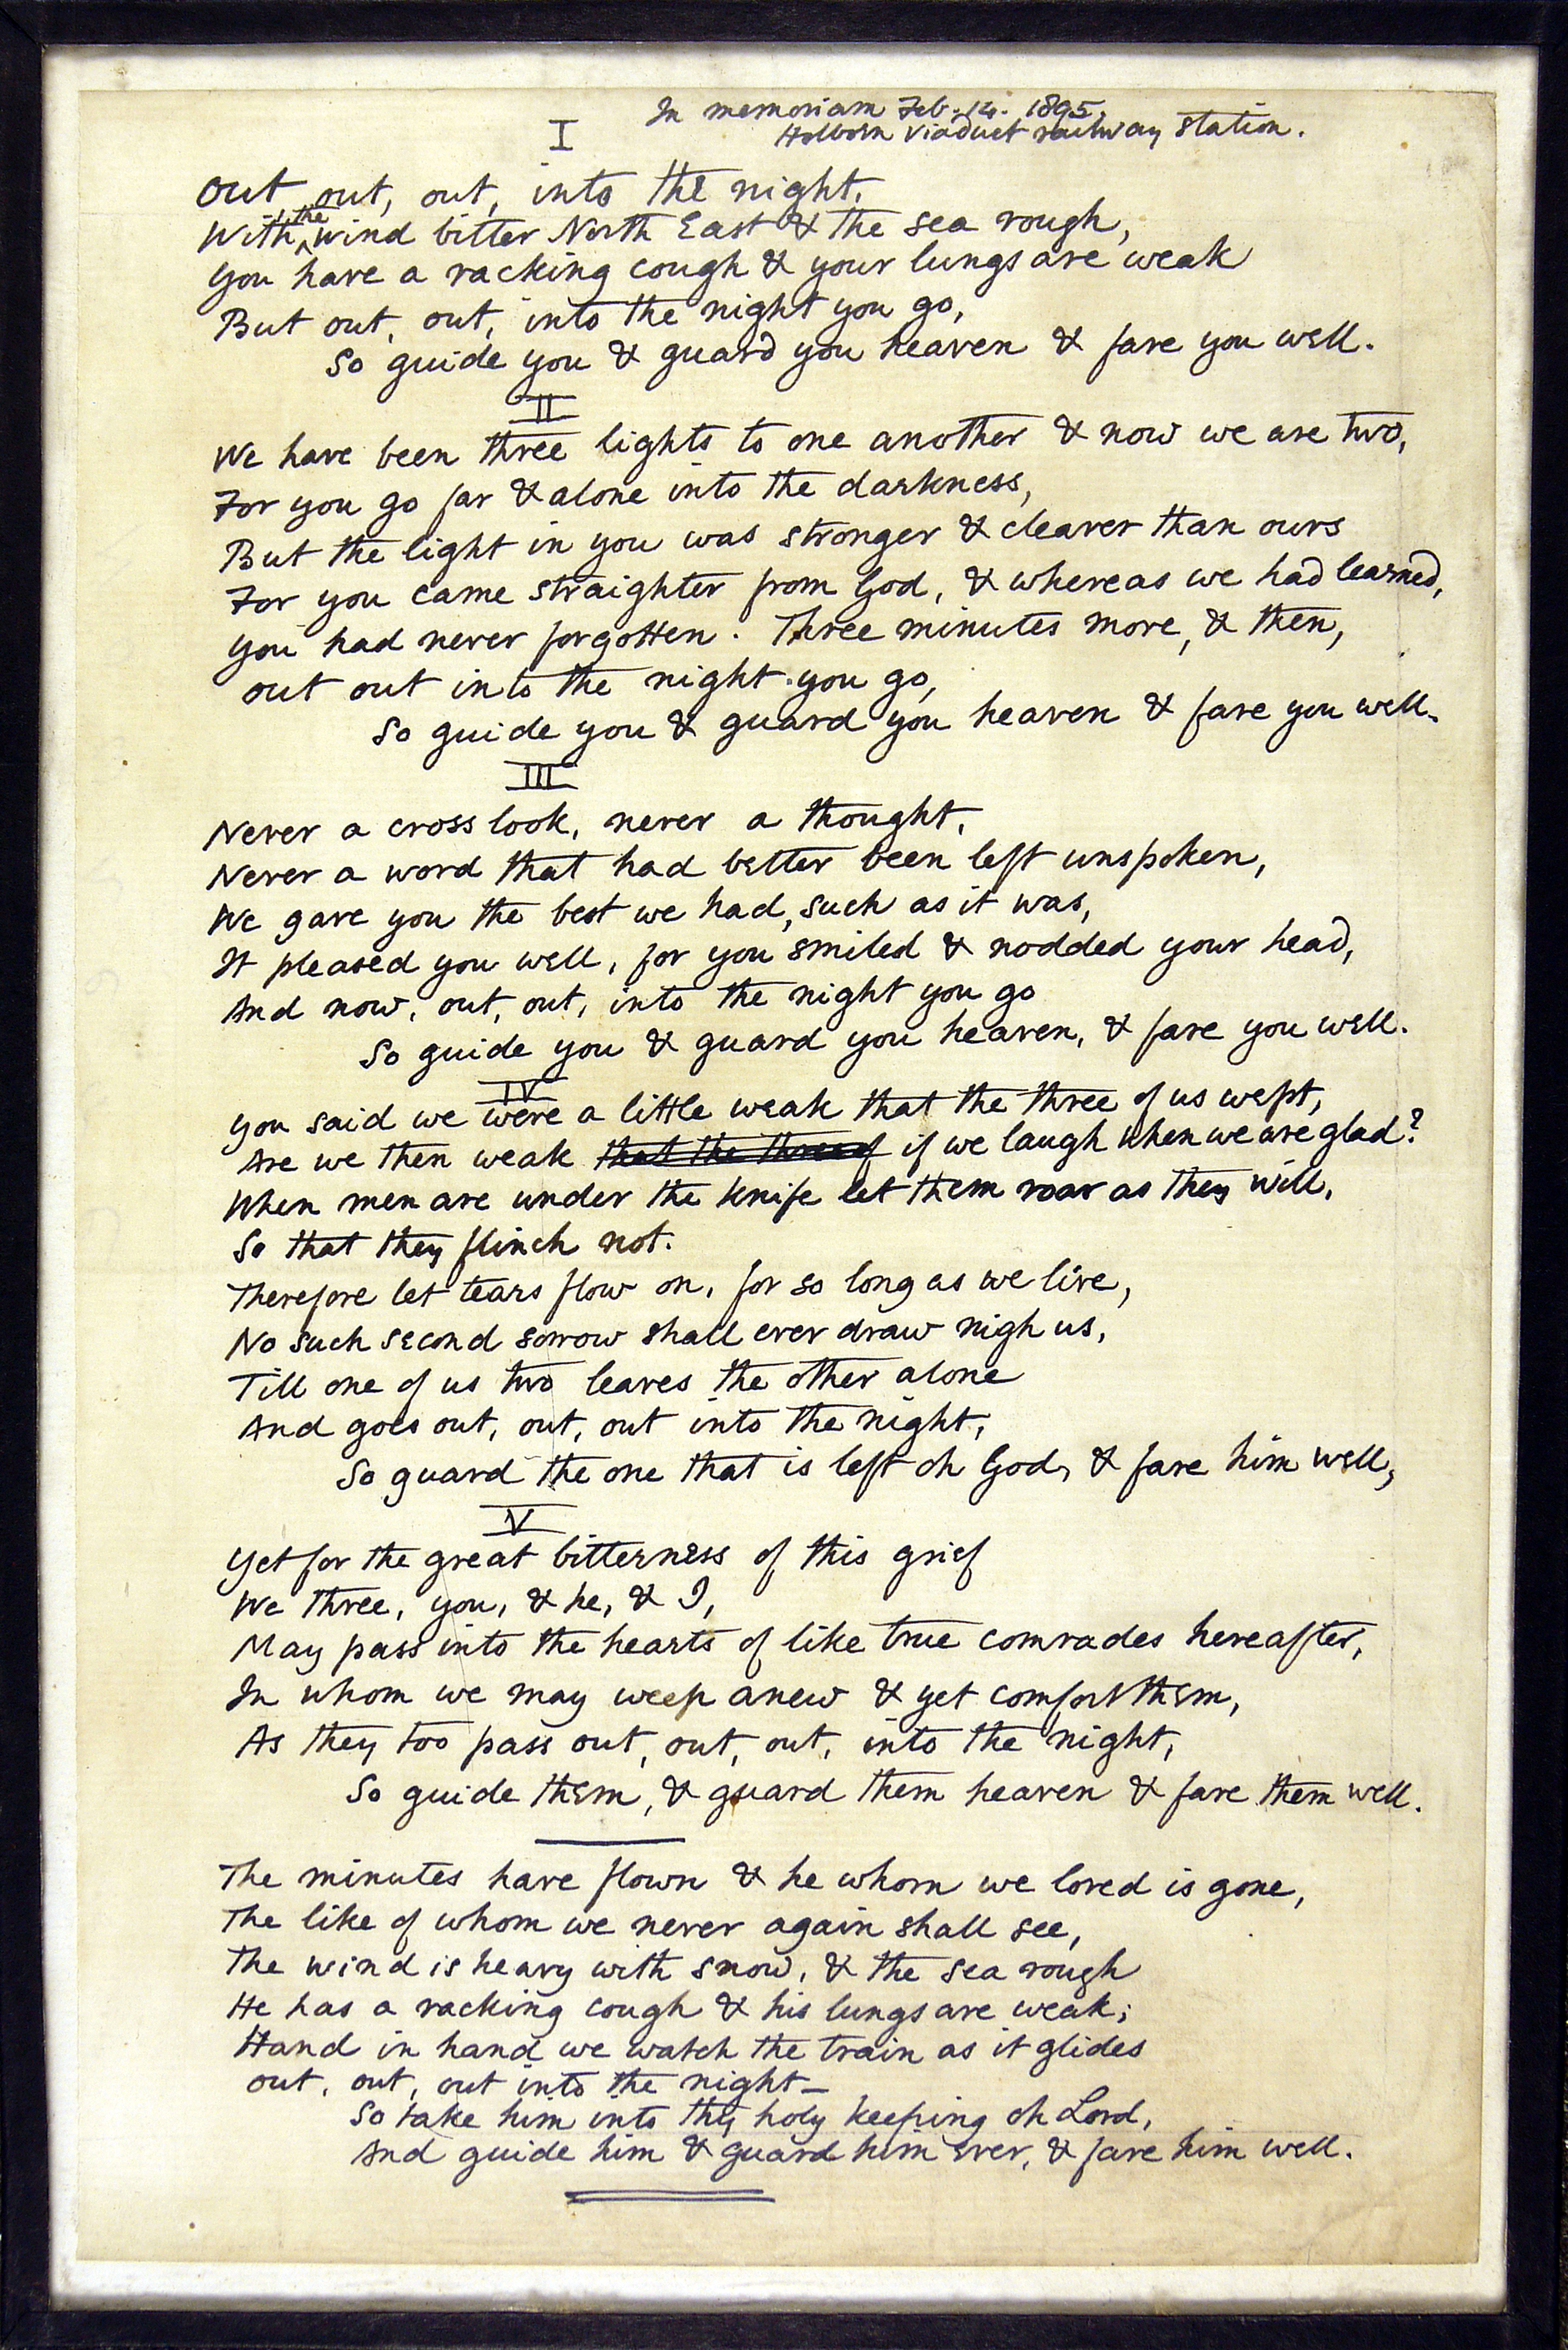 Butler's framed manuscript of 'In Memoriam'